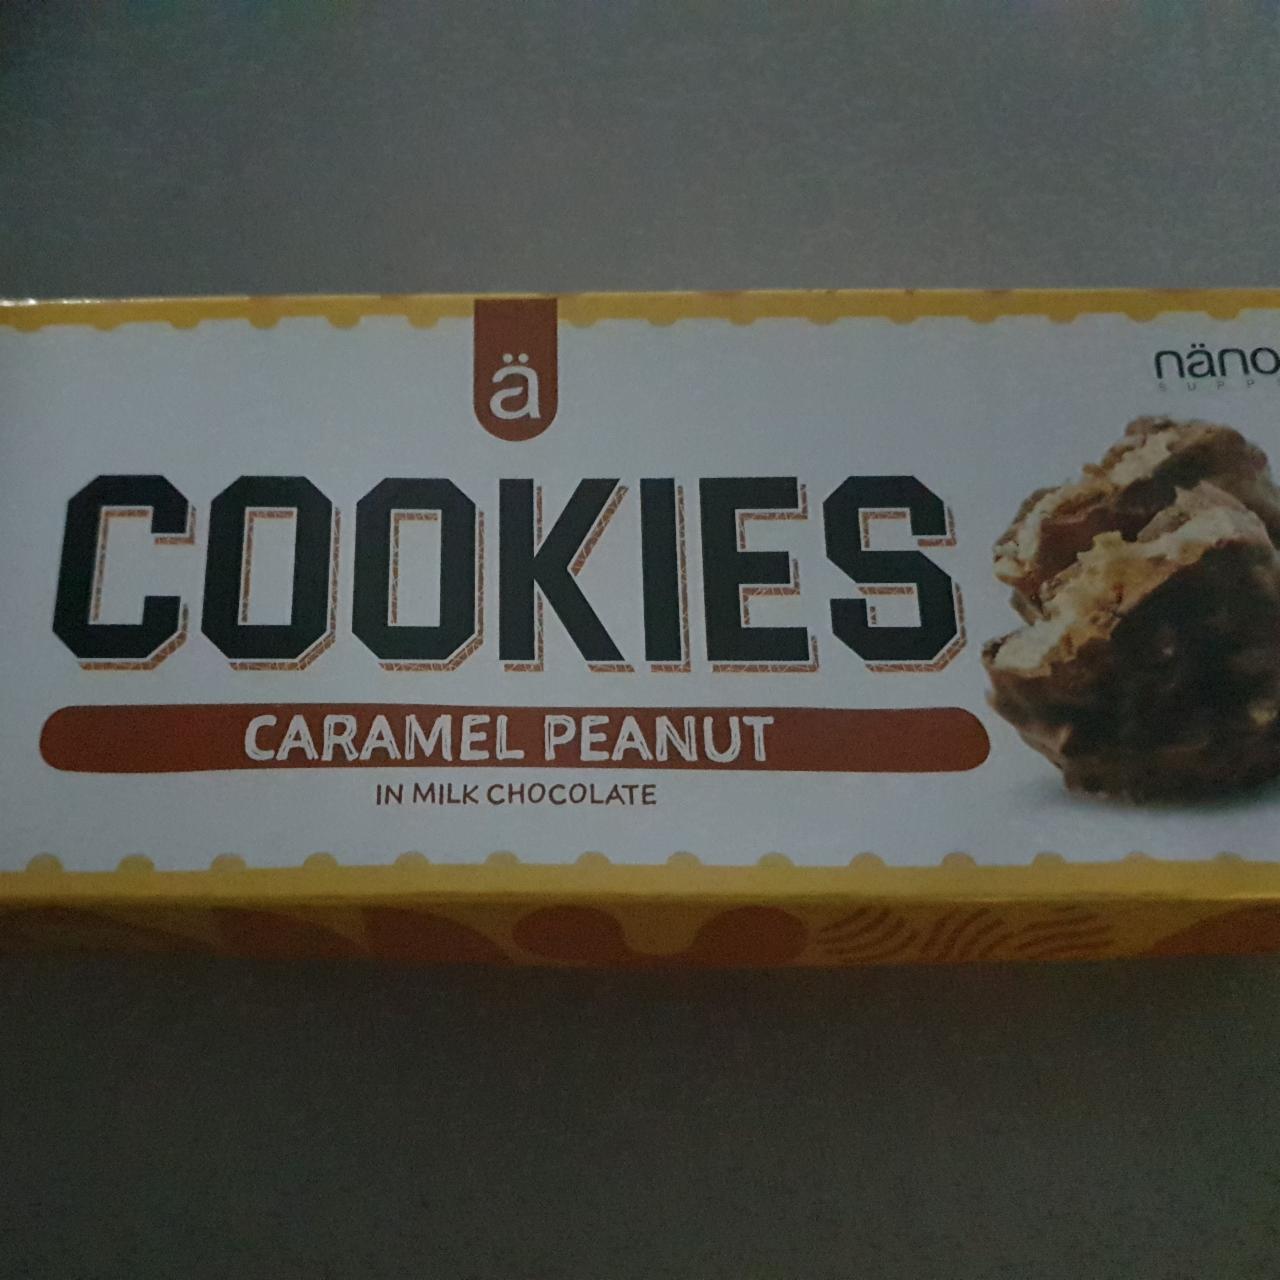 Képek - Cookies caramel peanut in milk chocolate Näno